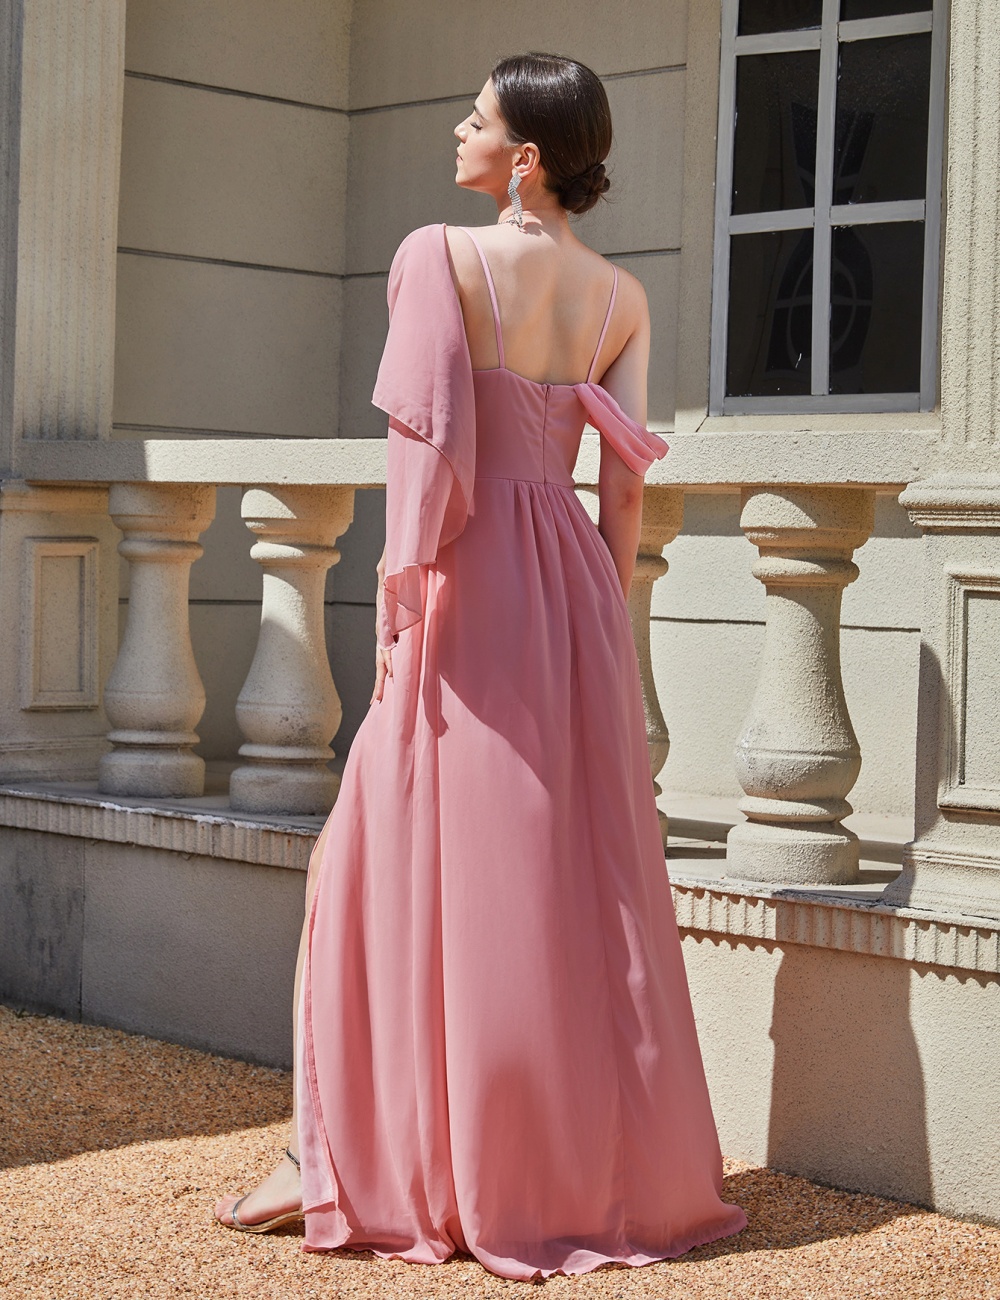 European style formal dress dress for women